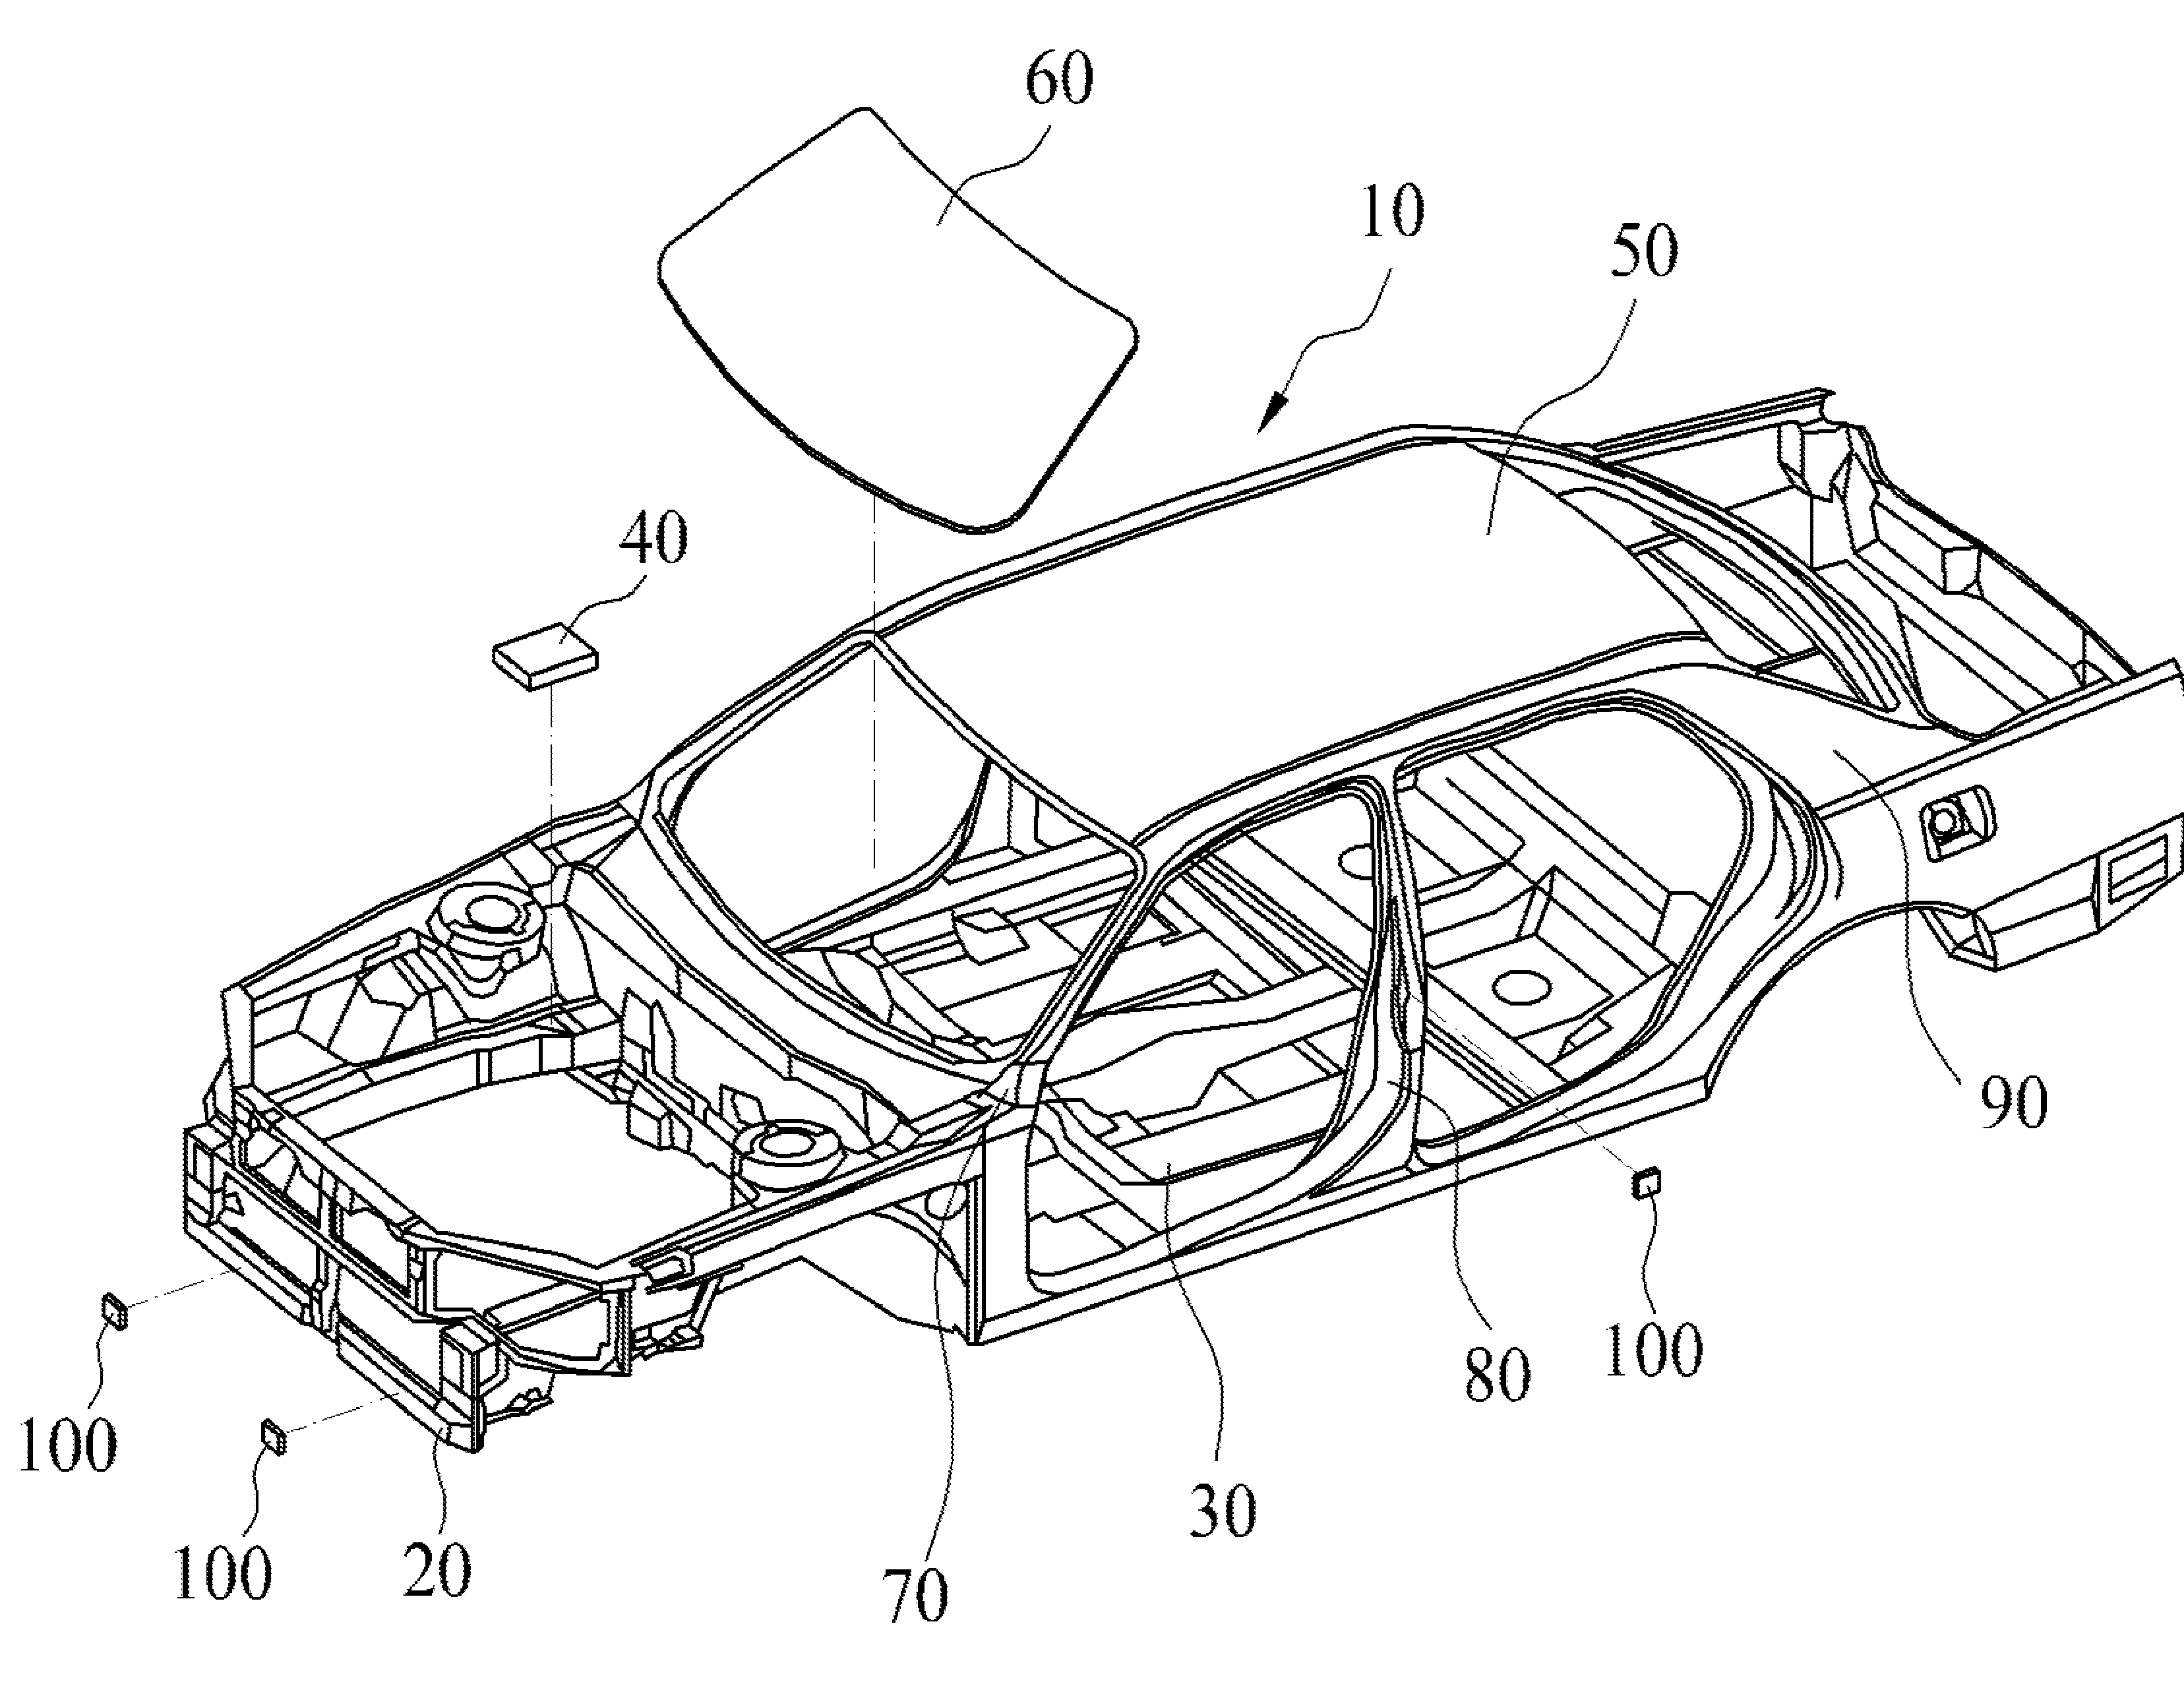 Airbag sensor module and car body integrated with airbag sensor module